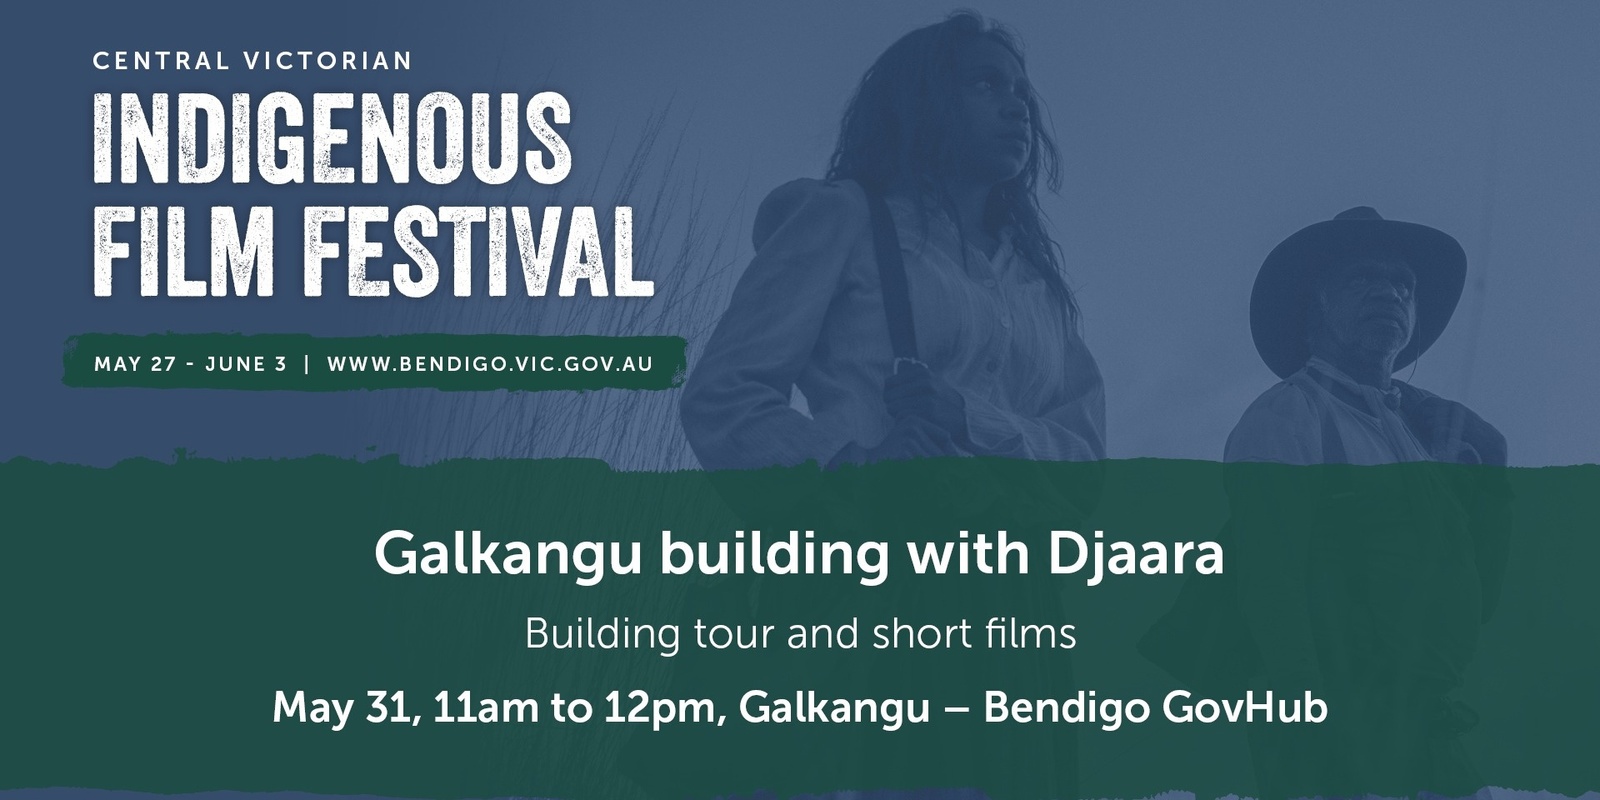 Banner image for Central Victorian Indigenous Film Festival: Galkangu building with Djaara - Building tour and short films